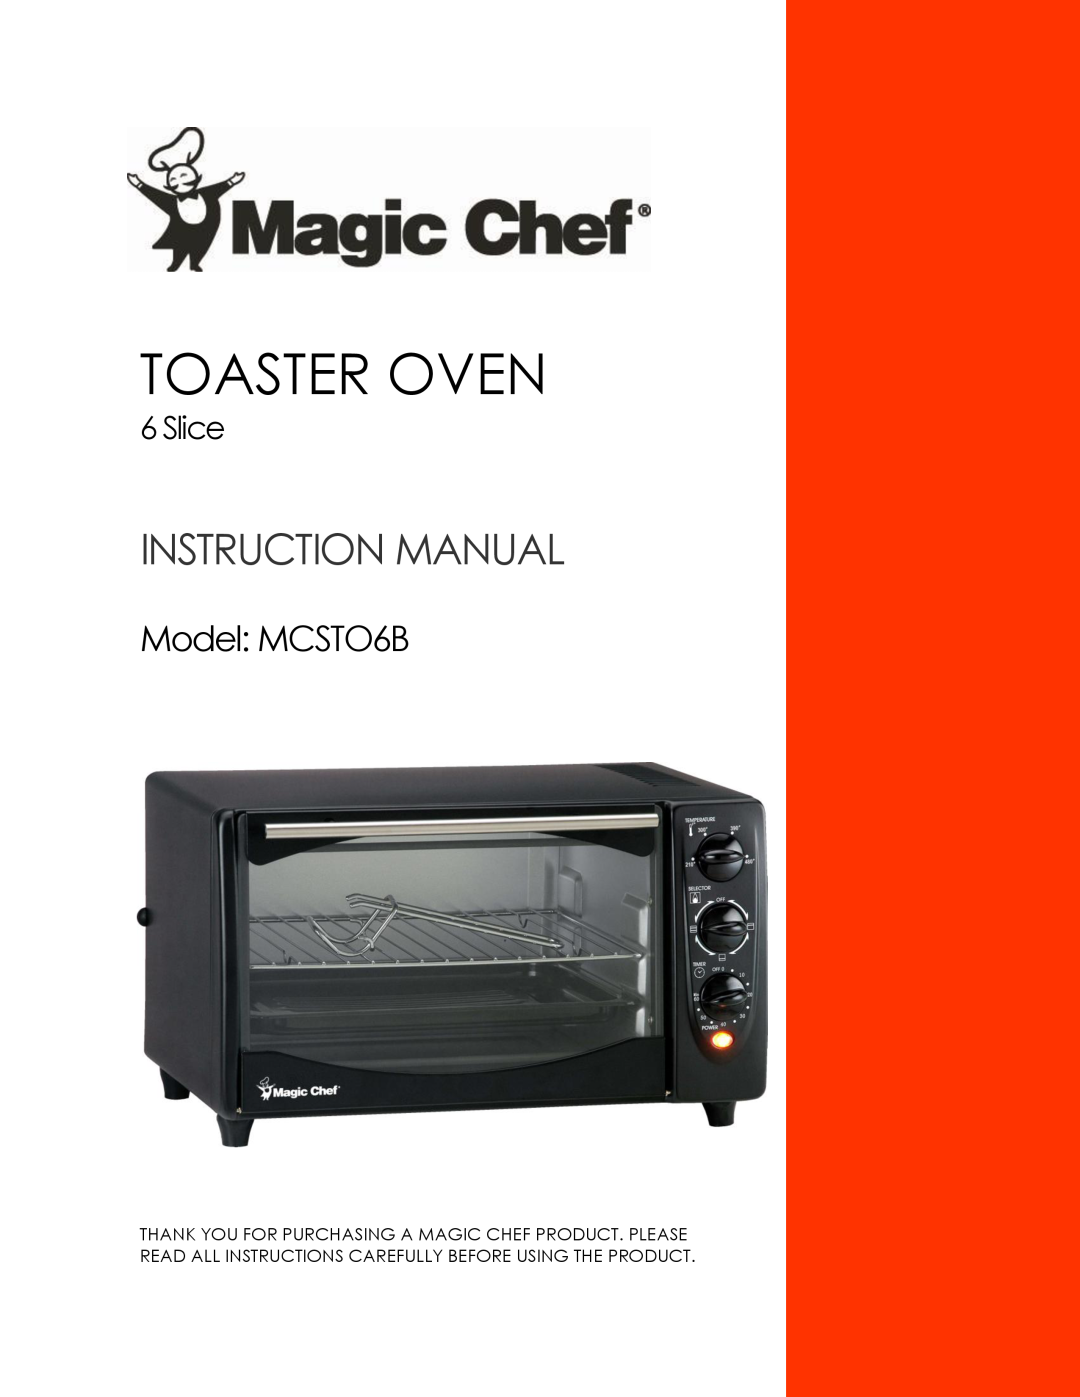 Magic Chef instruction manual Toaster Oven, Model MCSTO6B, Slice 